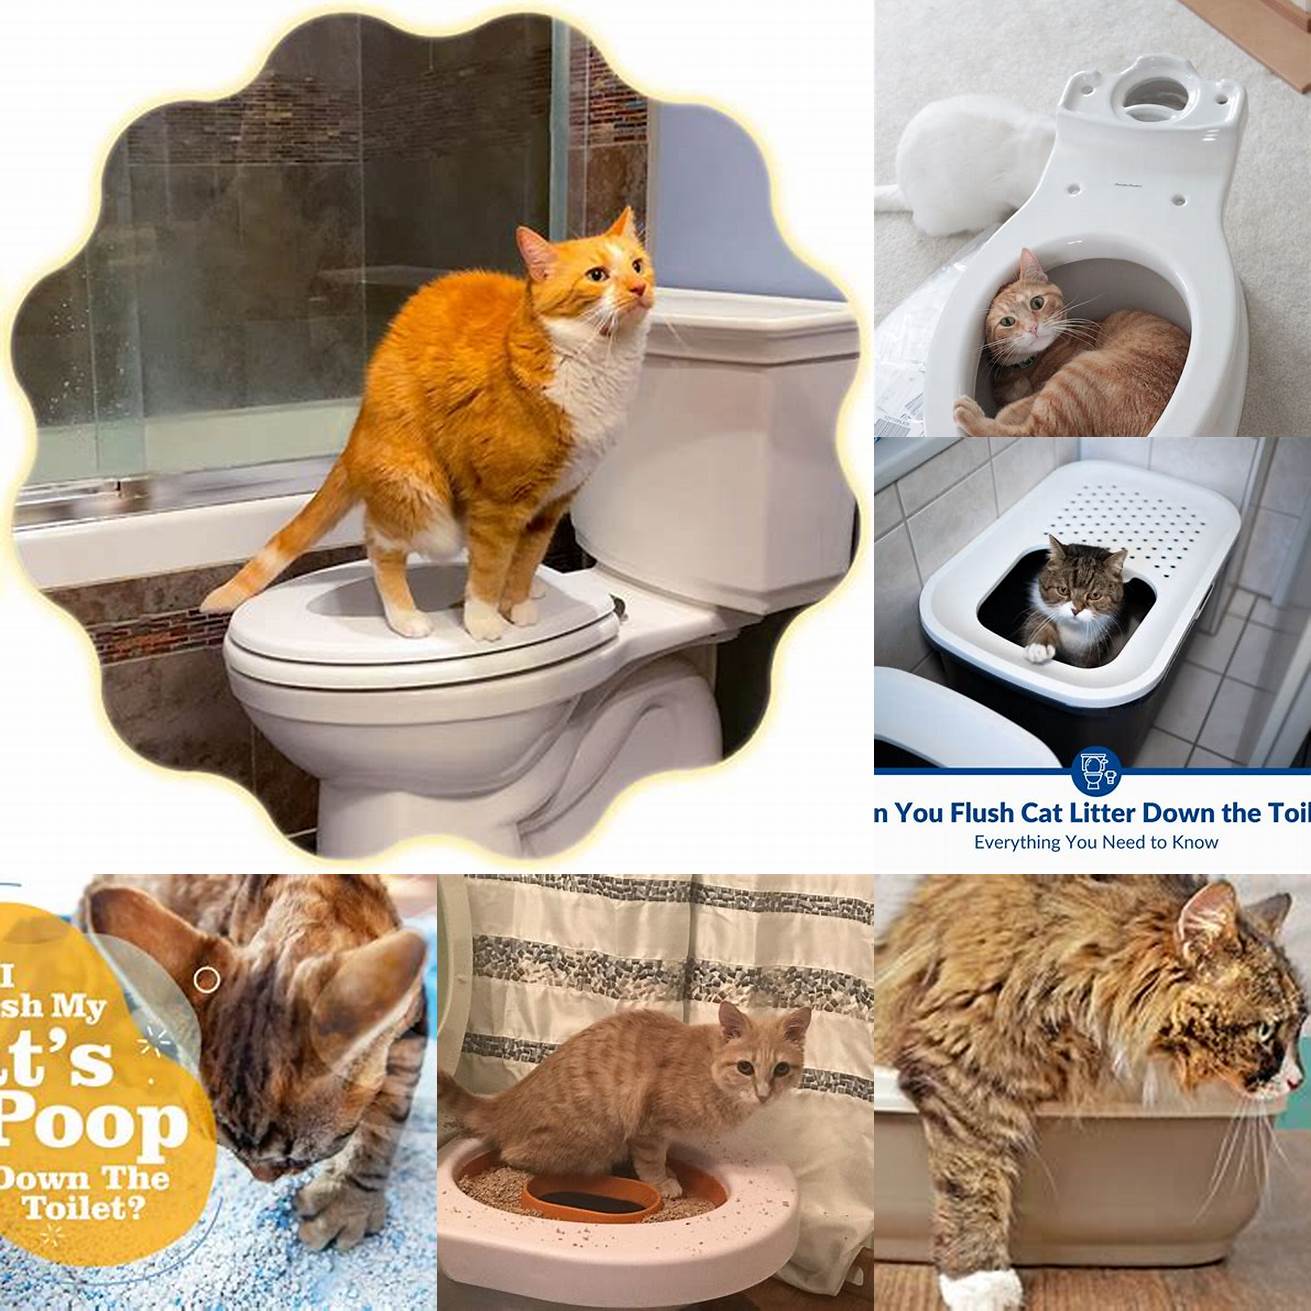 Q Can I flush cat litter down the toilet